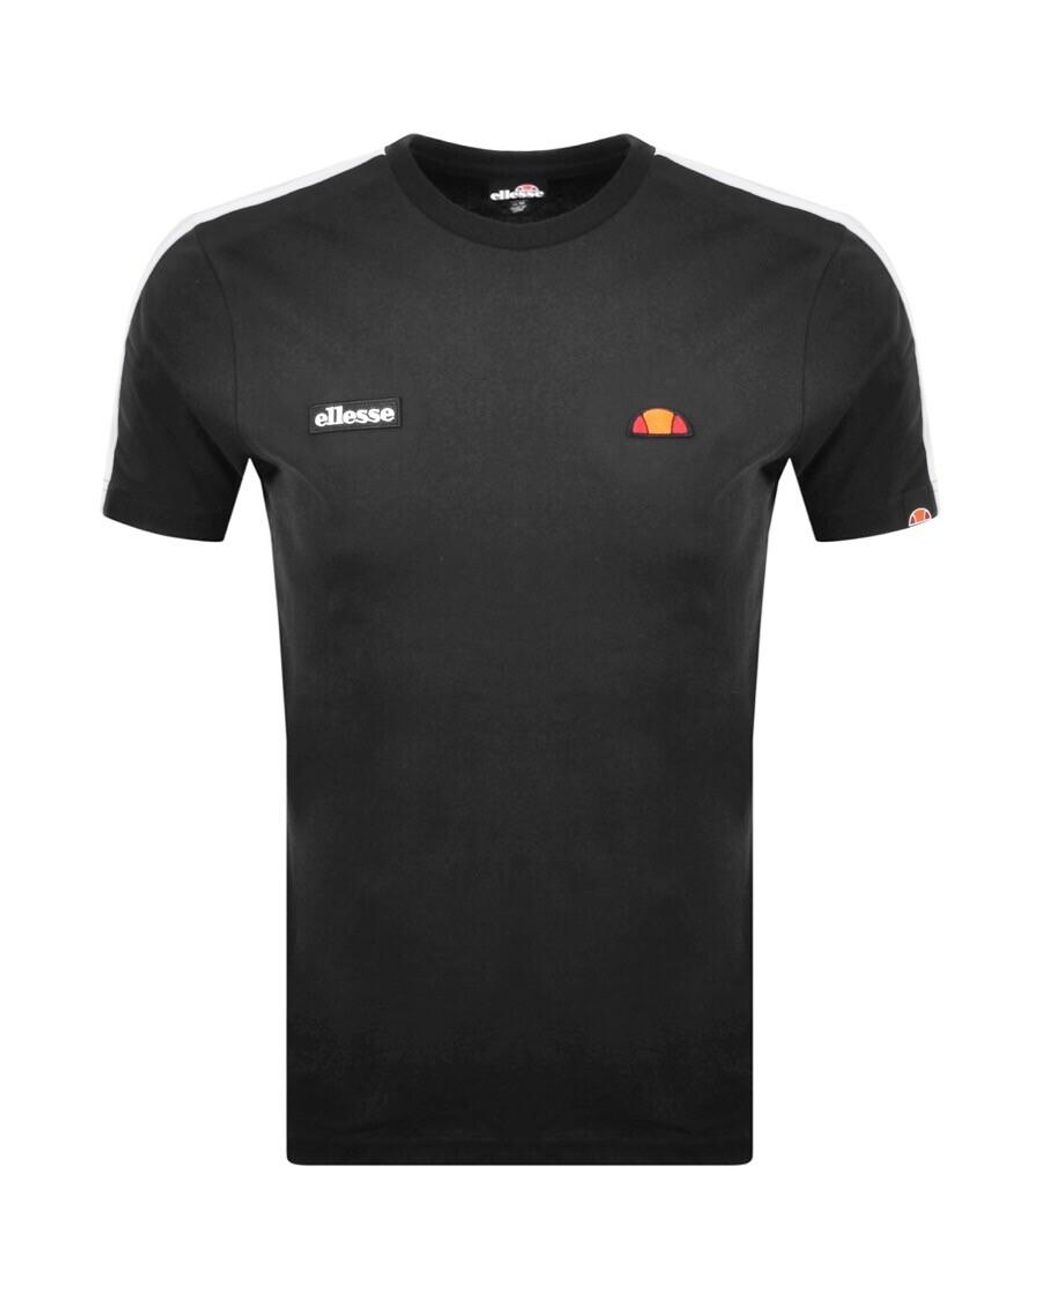 Ellesse Cotton La Versa Logo T Shirt in Black for Men - Lyst